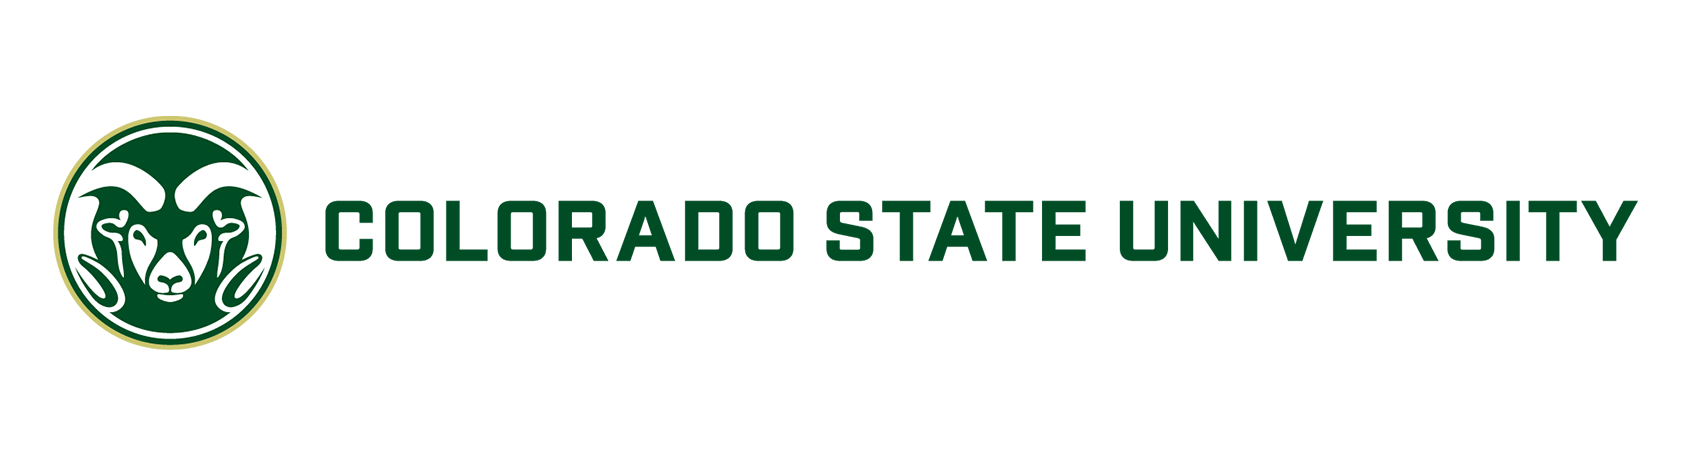 Colorado-University-Logo.png